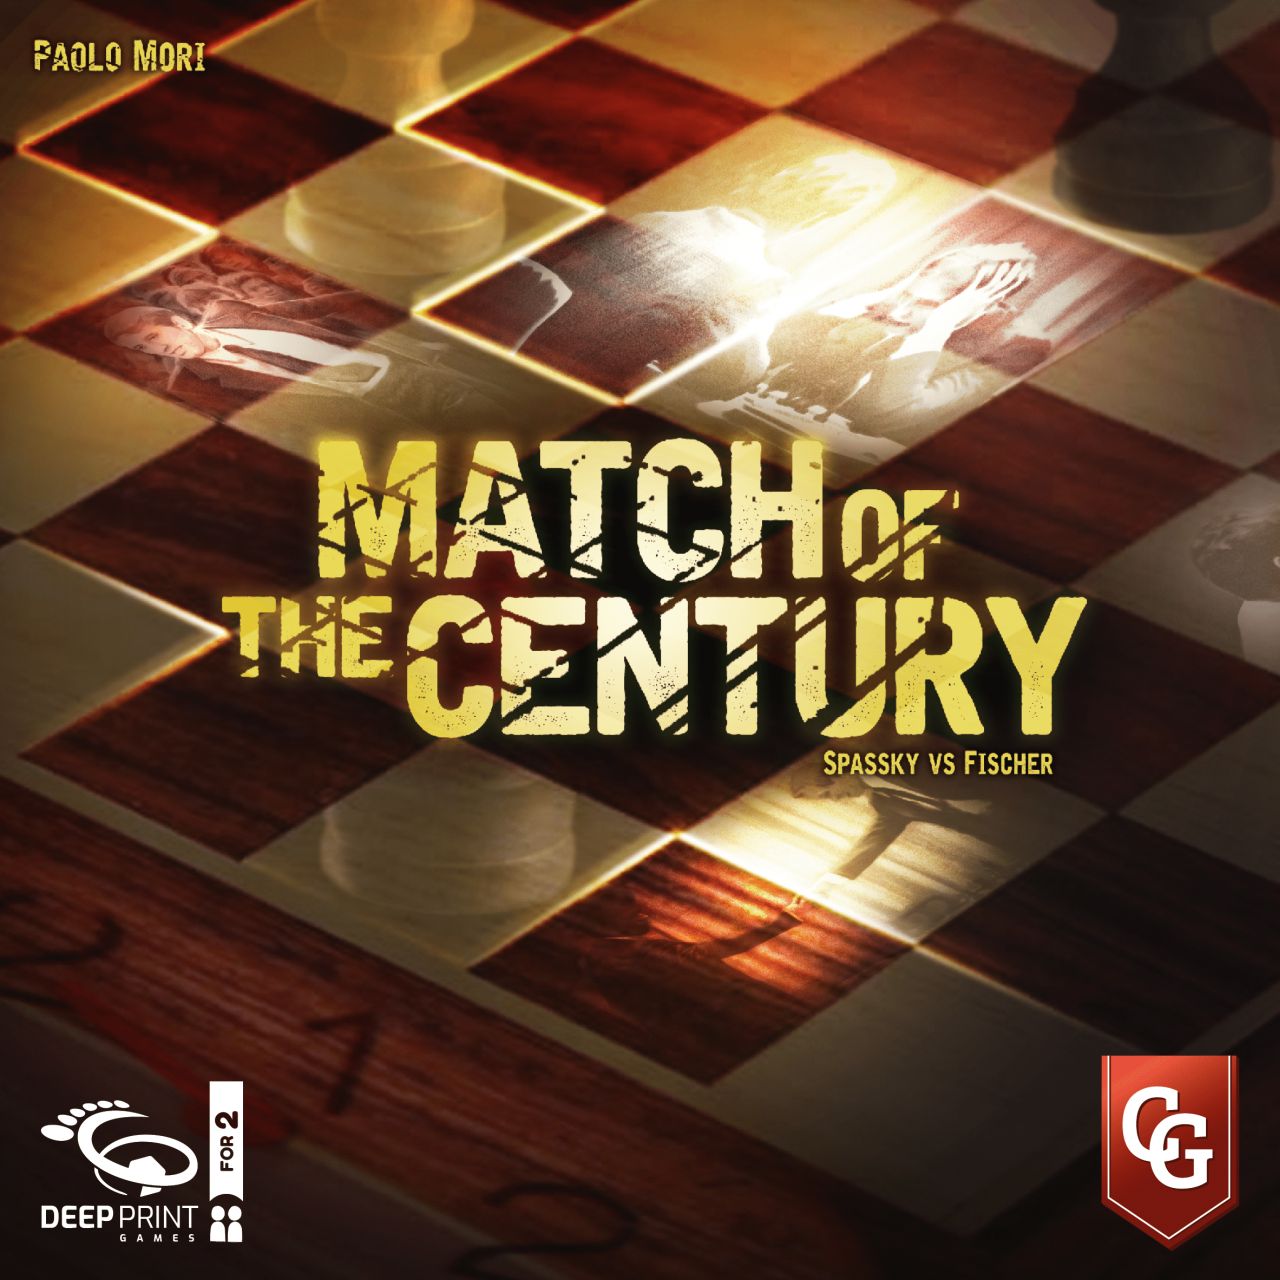 Match of the Century okładka gry